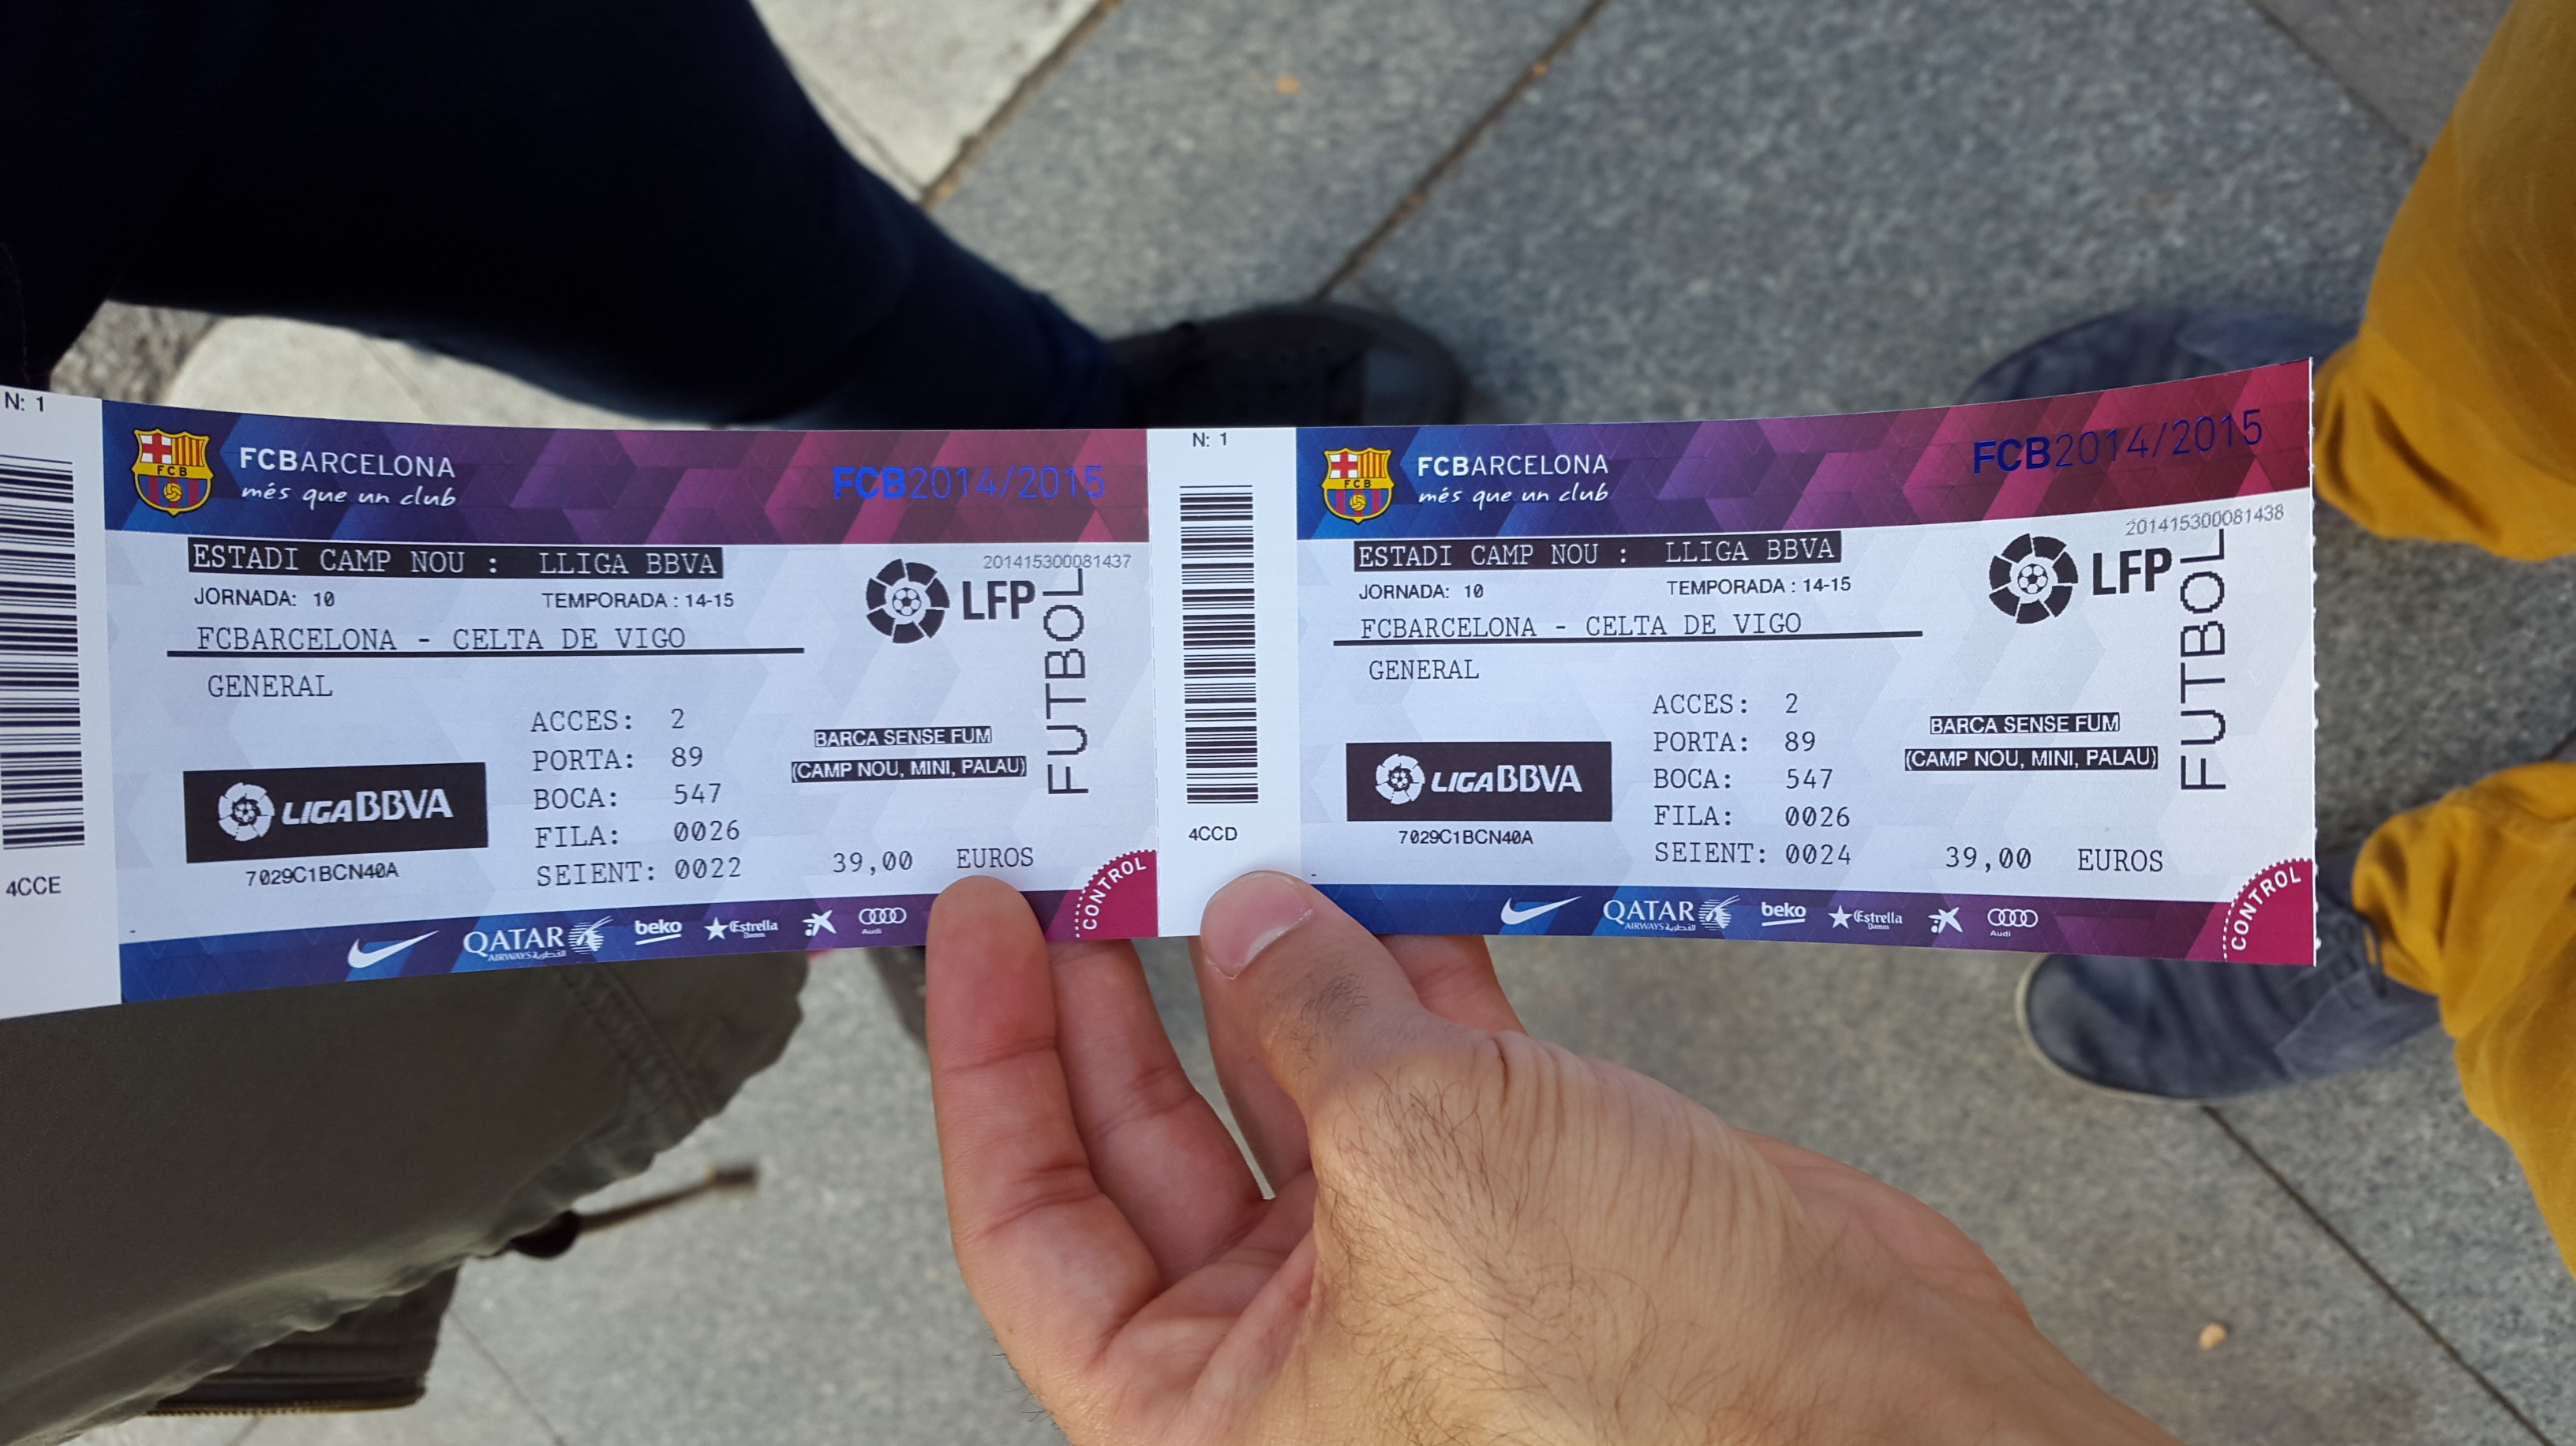 Билеты на матч реал мадрид. Билет на матч Барселоны. Билет на игру Барселоны. Билет до Барселоны. Билет на самолет в Барселону.